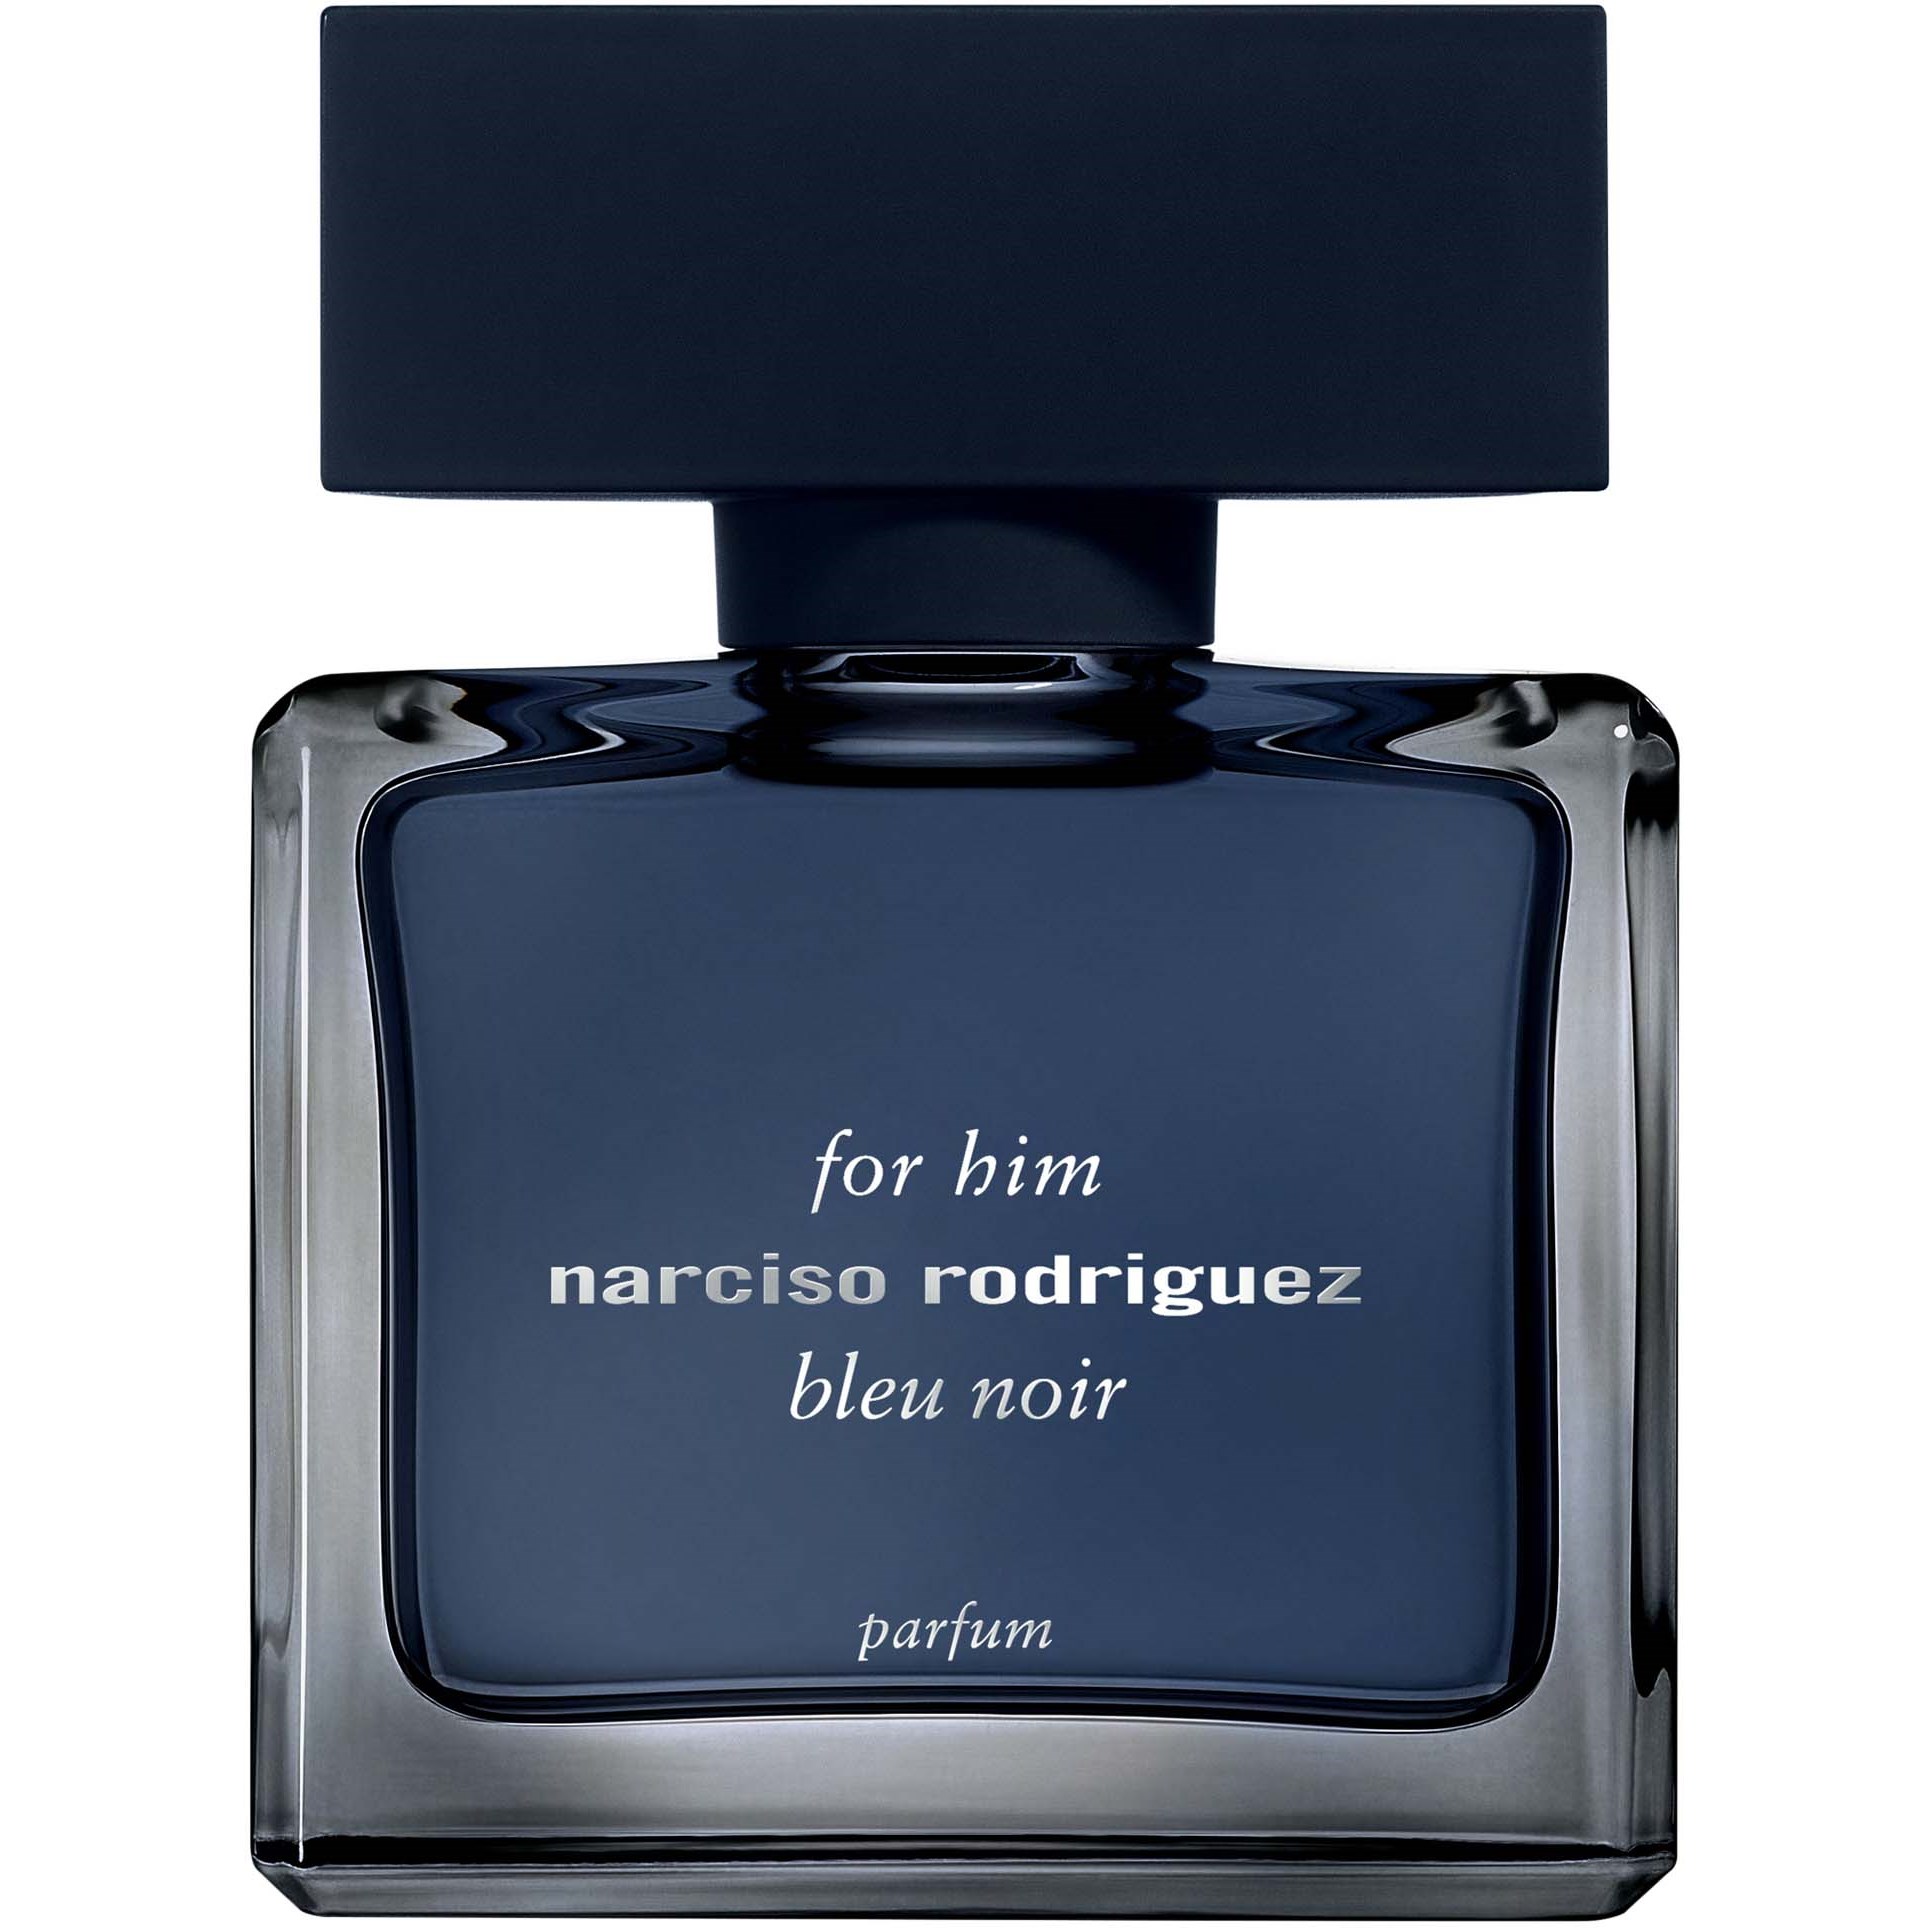 Zdjęcia - Perfuma męska Narciso Rodriguez For Him Bleu Noir Parfum 50 ml 